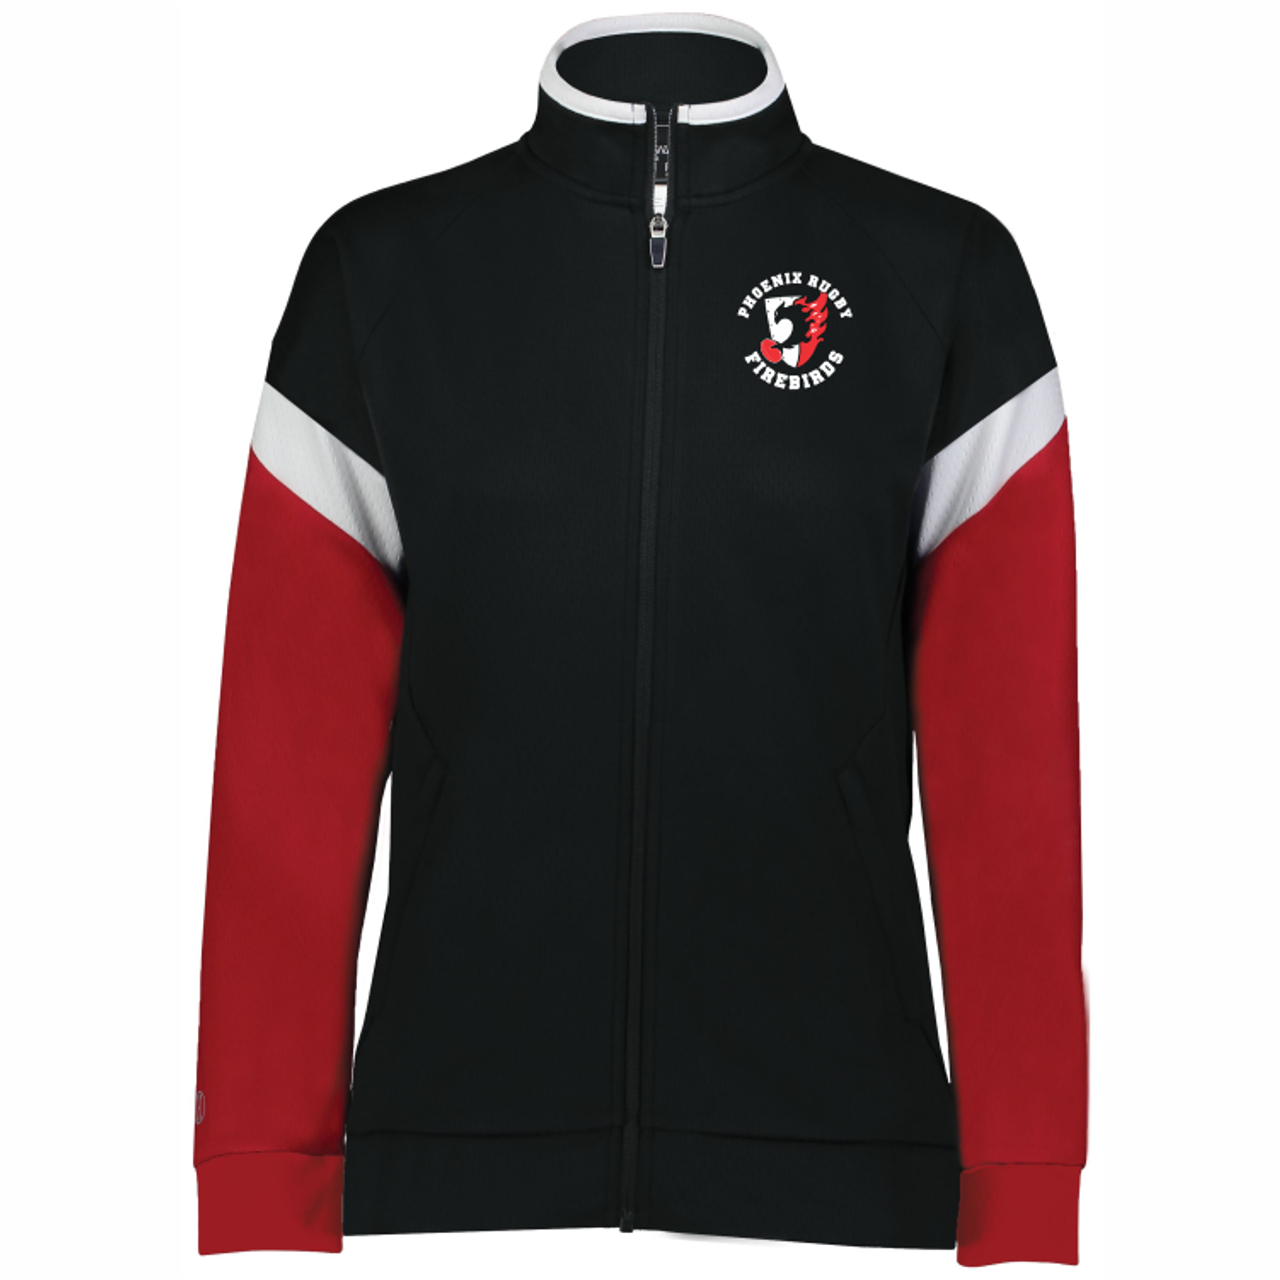 Phoenix Firebirds Rugby Warm Up Jacket, Black/Red/White